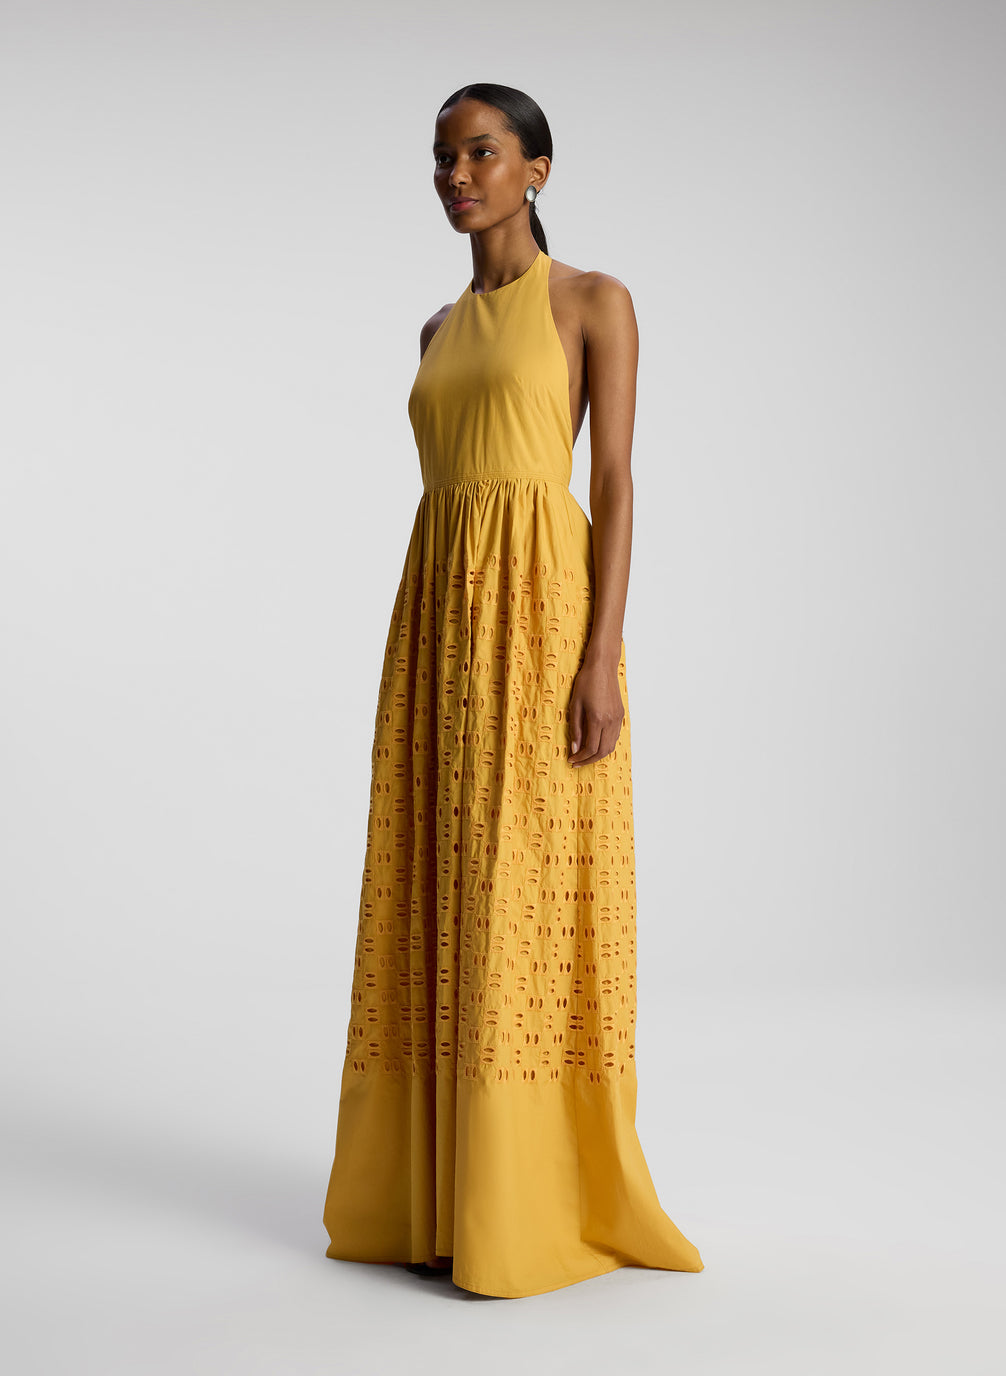 side view of woman wearing yellow maxi dress